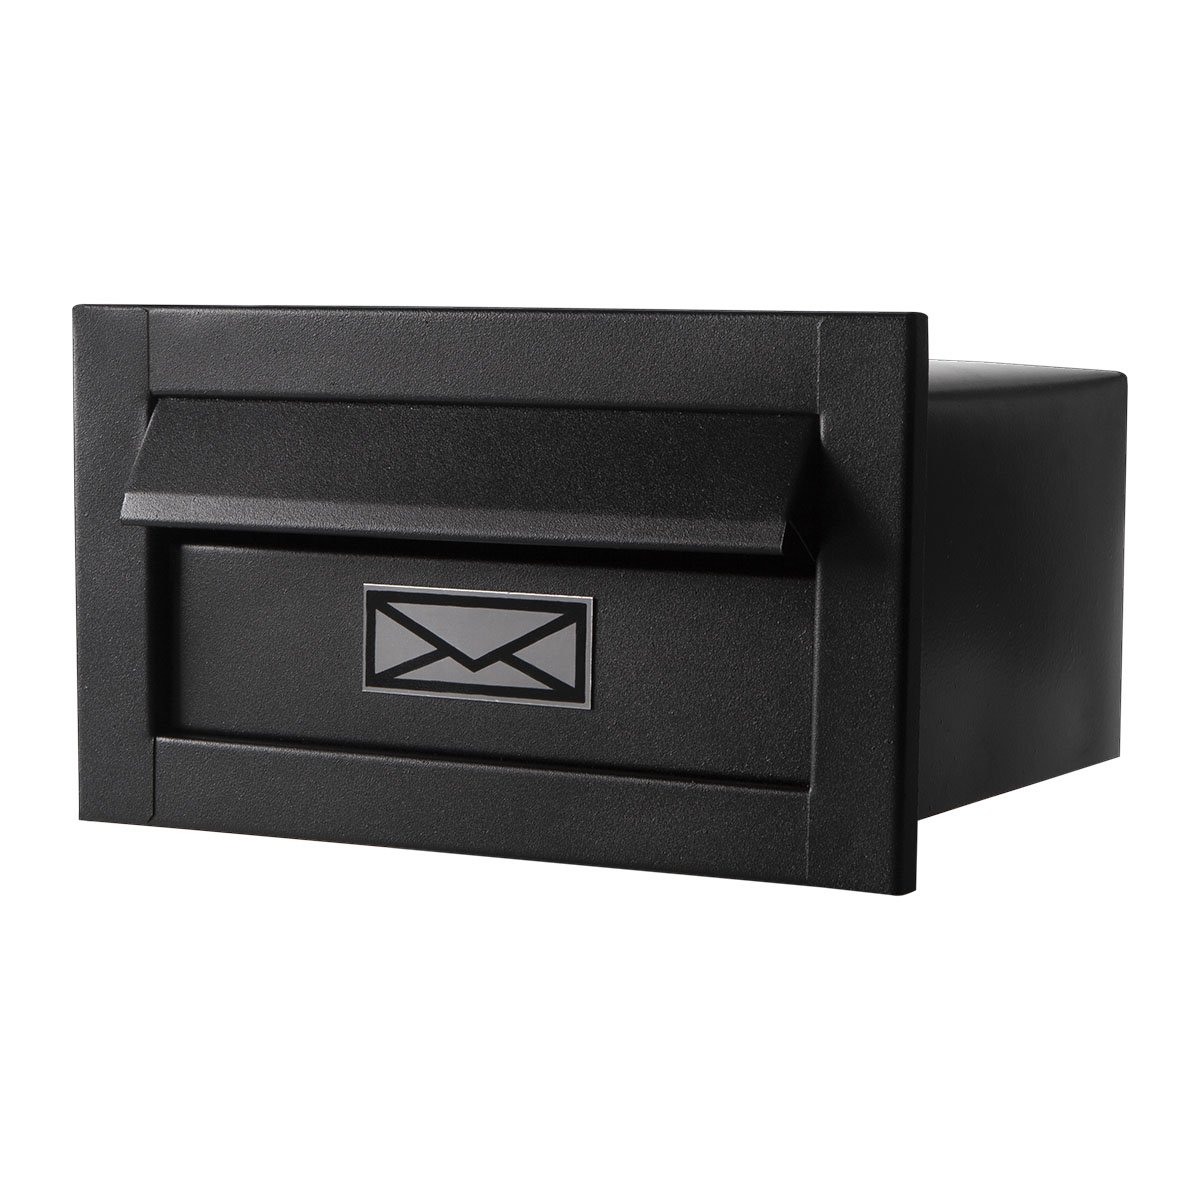 Mini Caixa Correio carta Luxo hat chapeu preta fosca compacta 20 cm profundidade